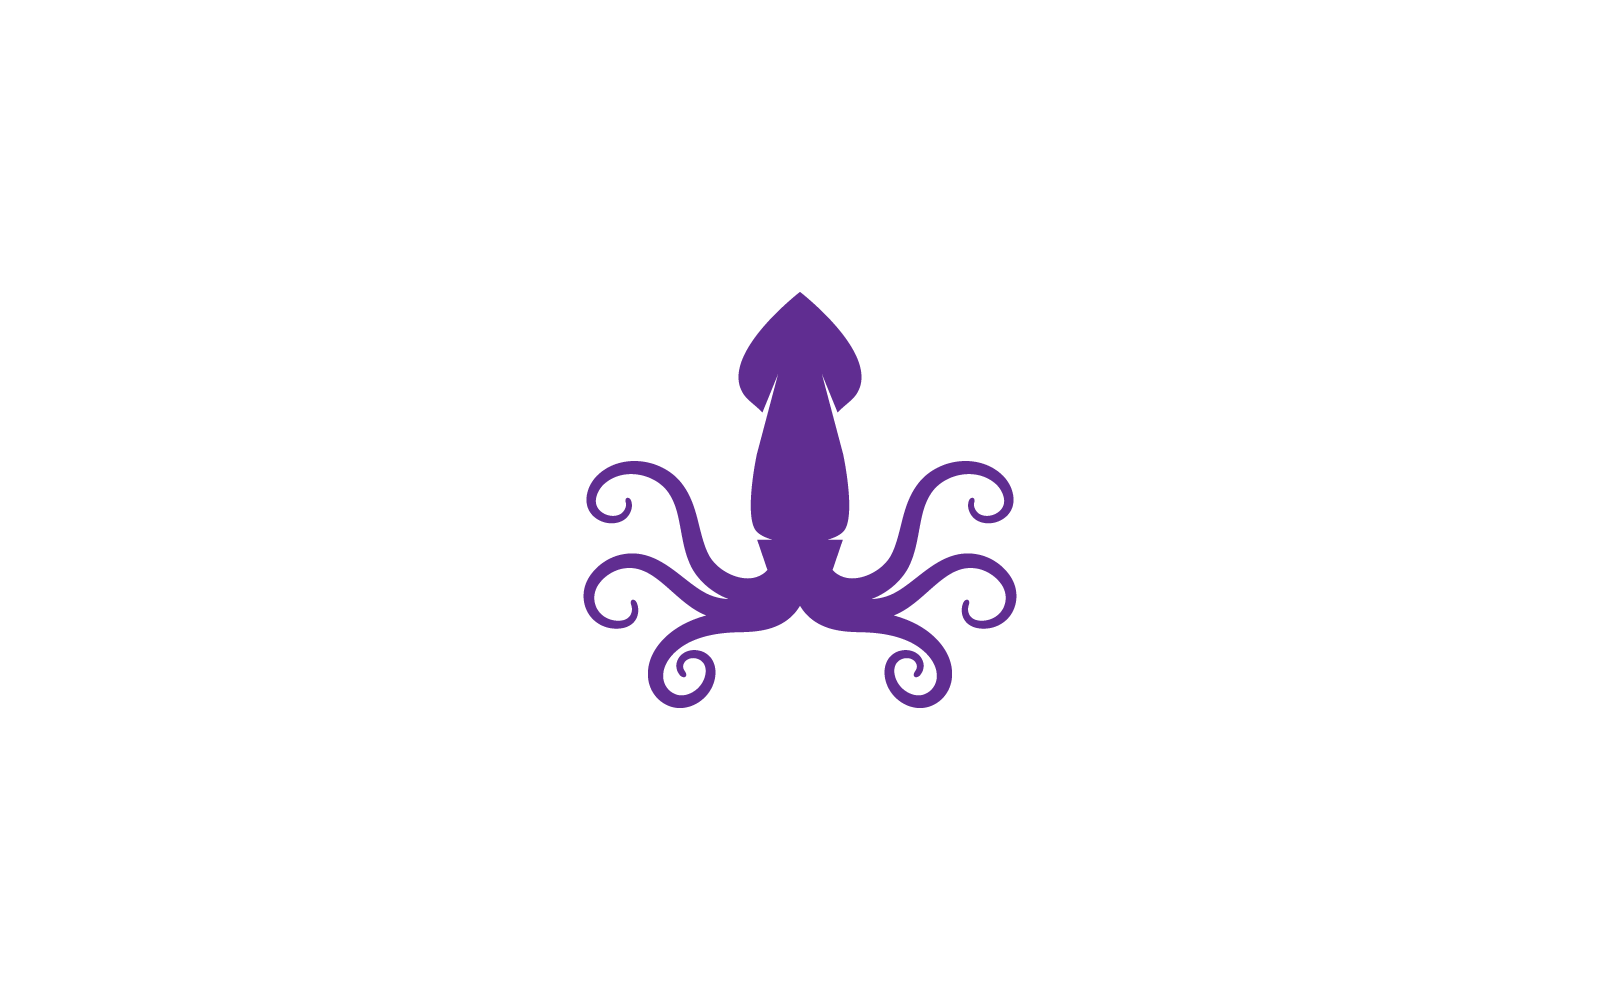 Squid fish illustration logo vector template